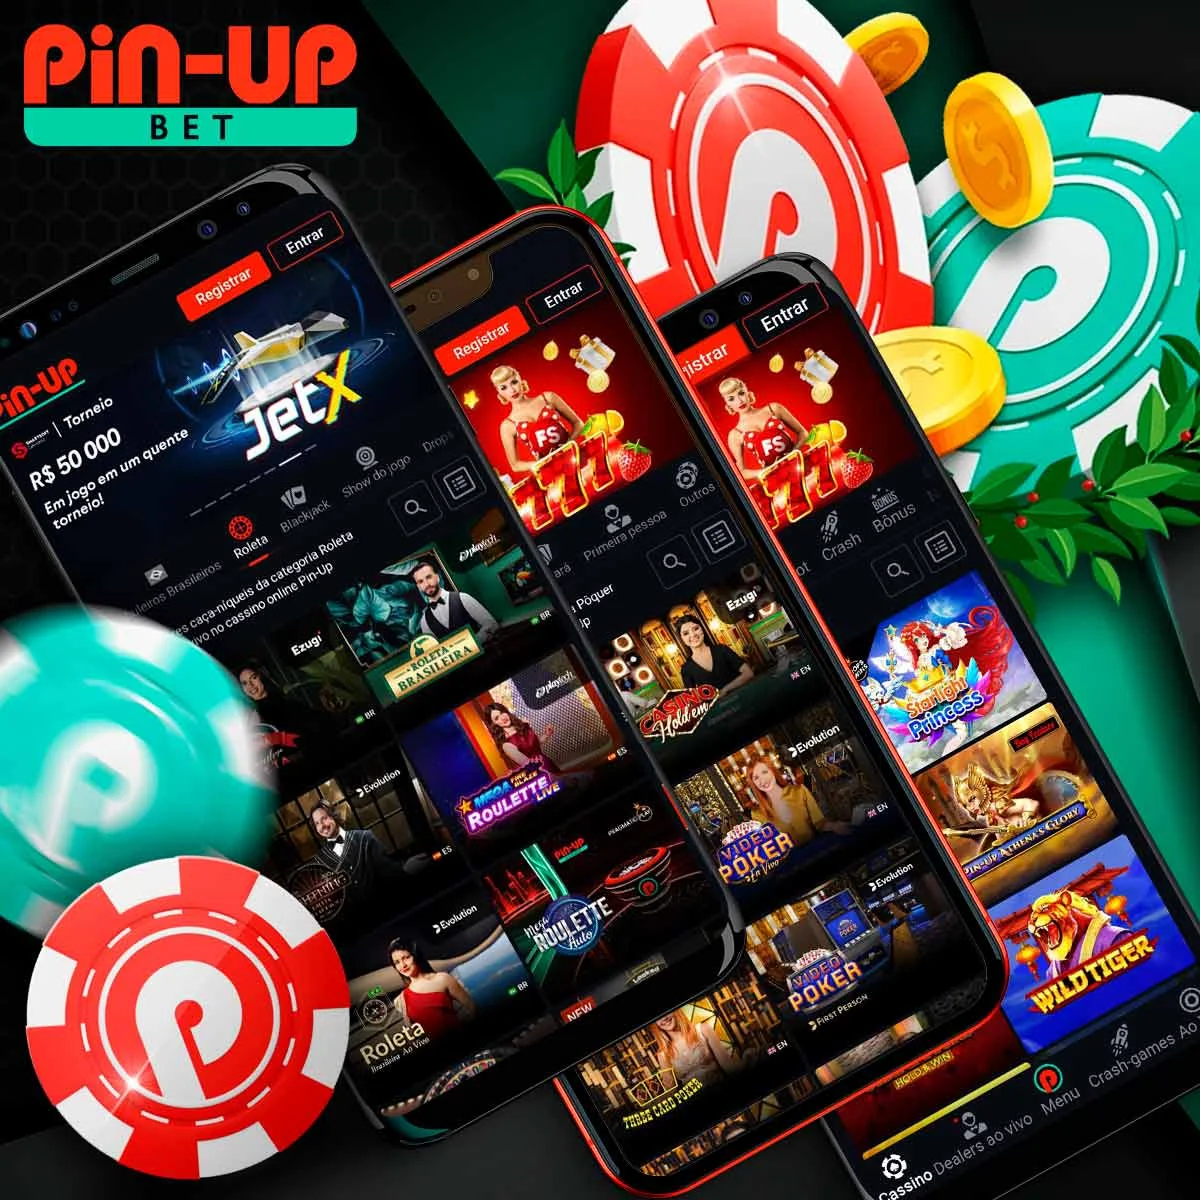 Jogos de cassino no aplicativo Pin Up no mercado brasileiro